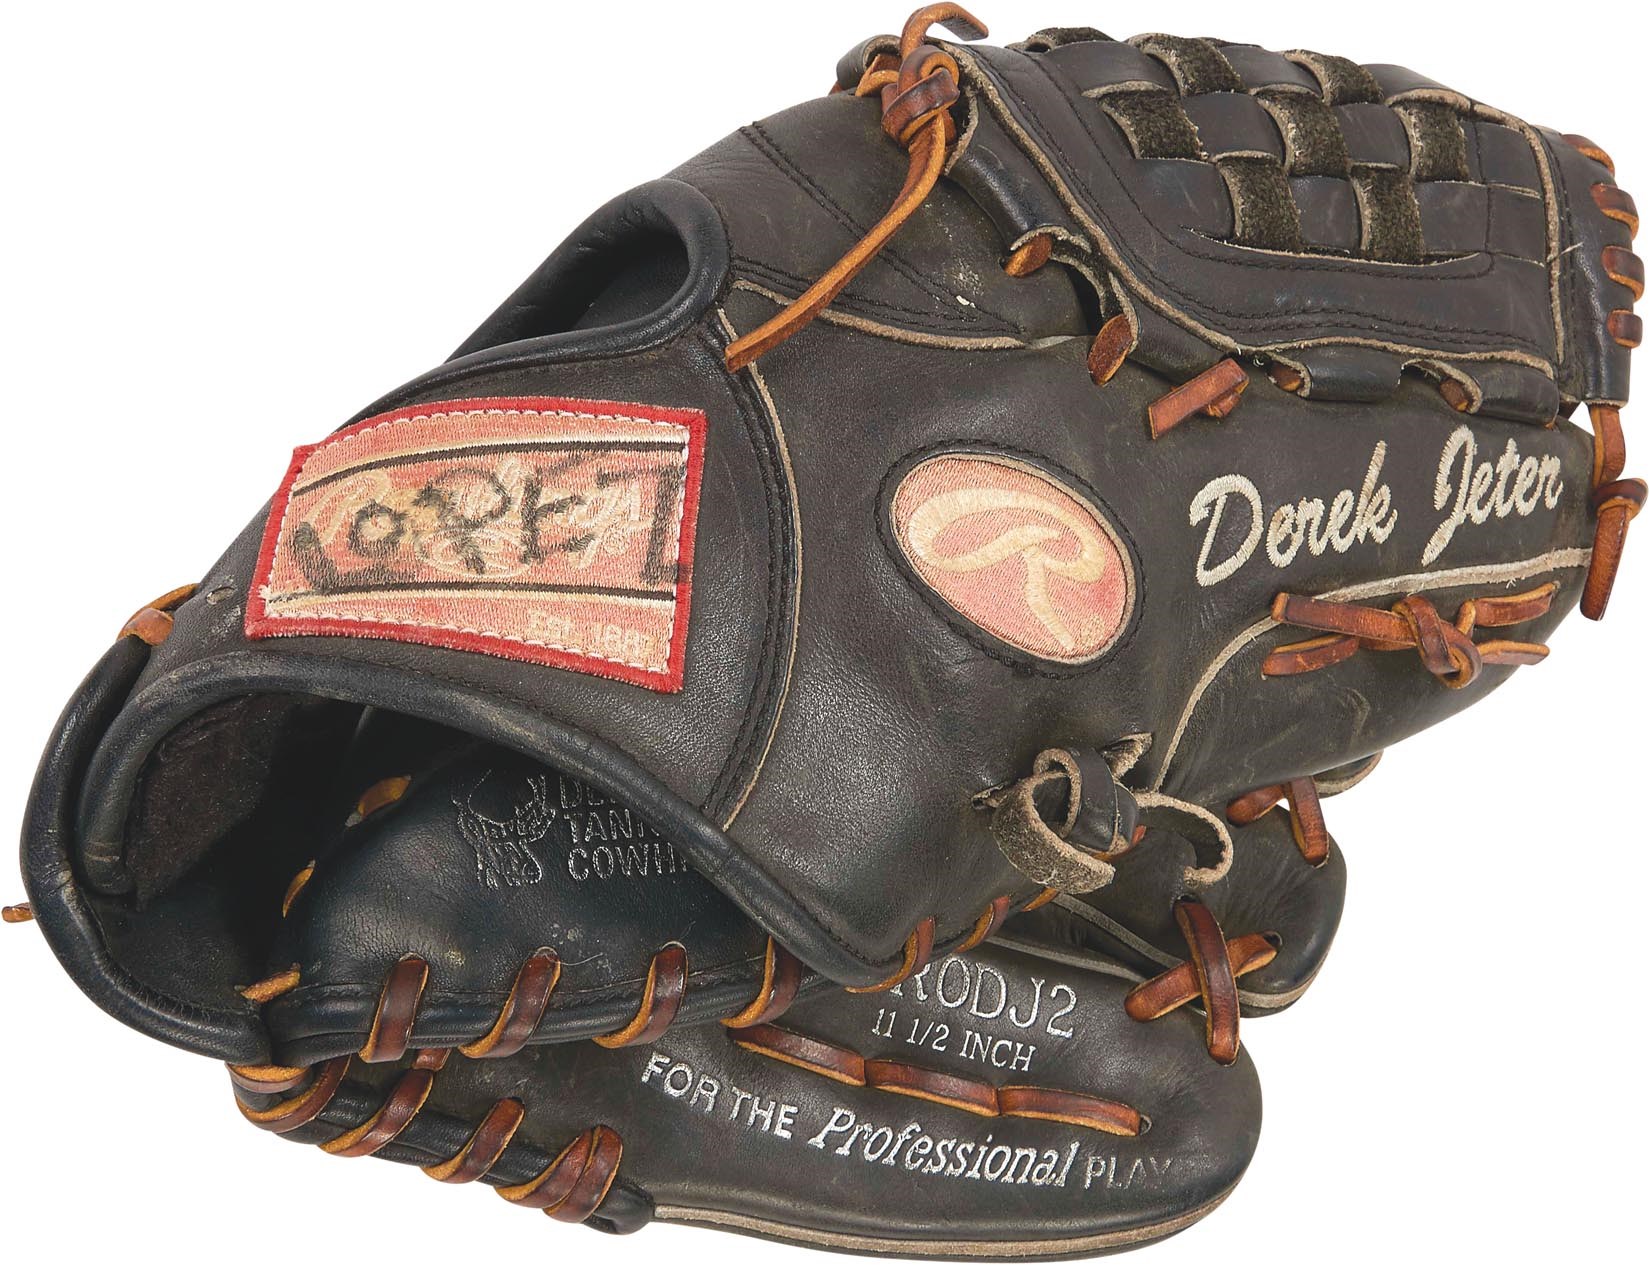 NY Yankees, Giants & Mets - Circa 2005 Derek Jeter Game Worn Glove from ex-Yankee w/his LOA